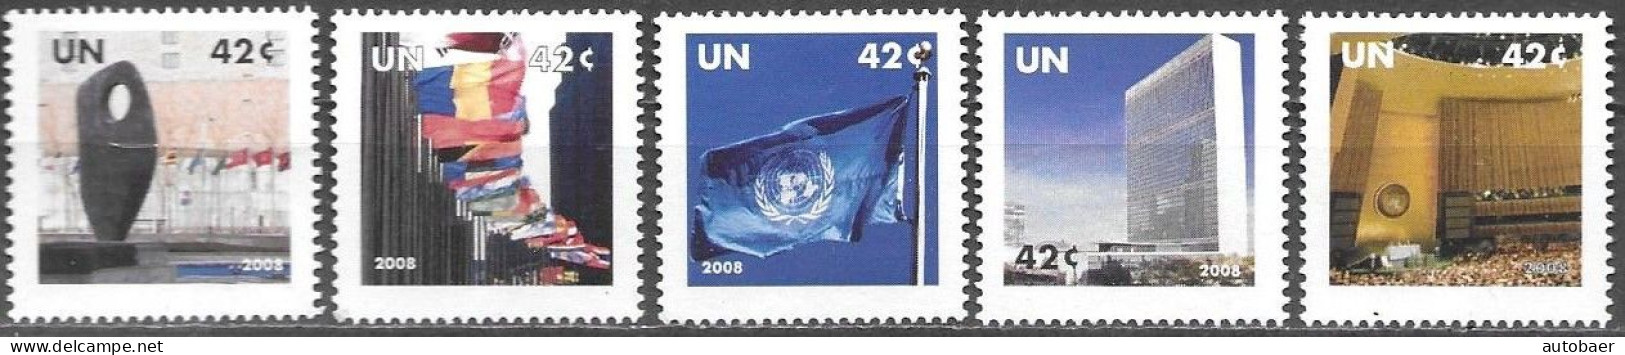 United Nations UNO UN Vereinte Nationen New York 2008 Greetings Mi.No.1091-95 MNH ** Neuf - Nuovi